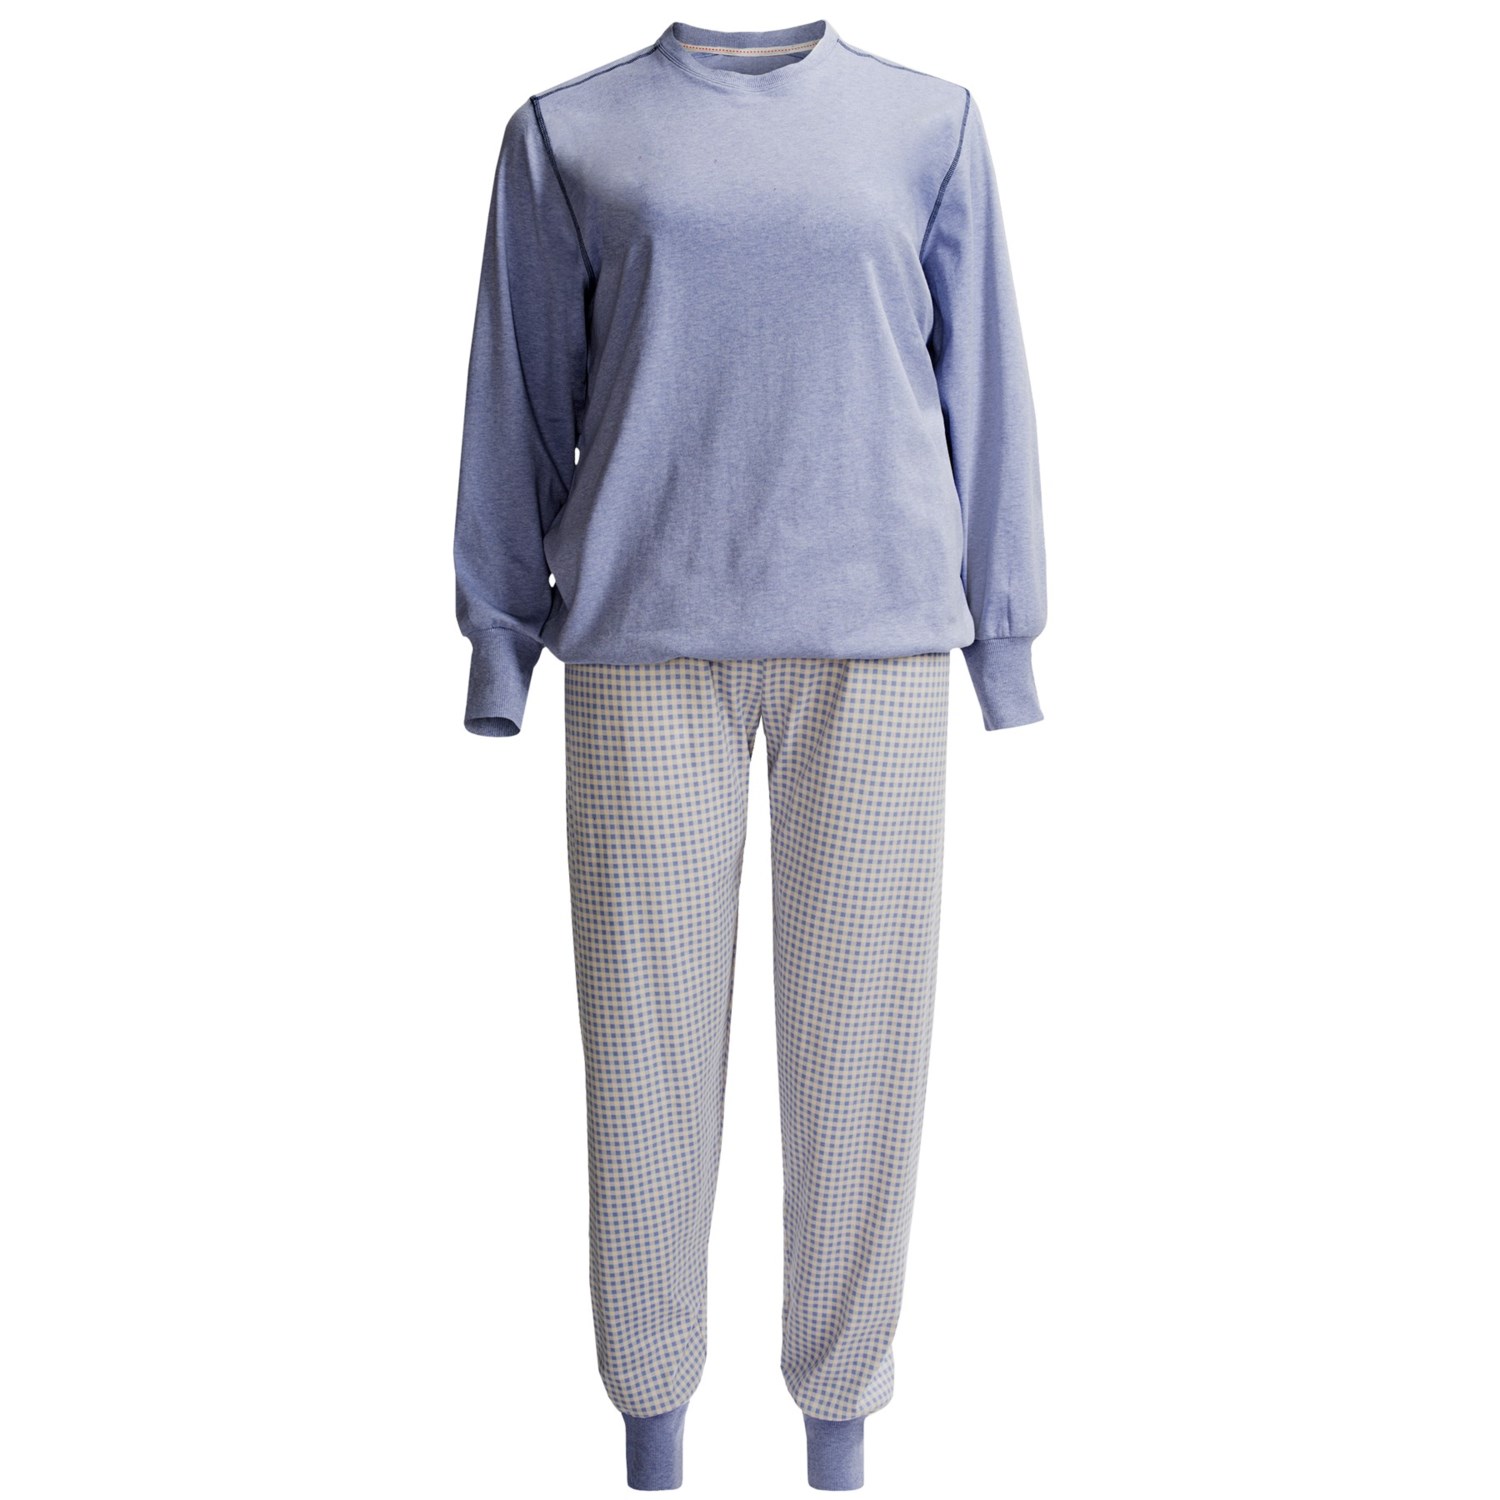 Calida Family Time Pajamas (For Women) 6834M - Save 68%